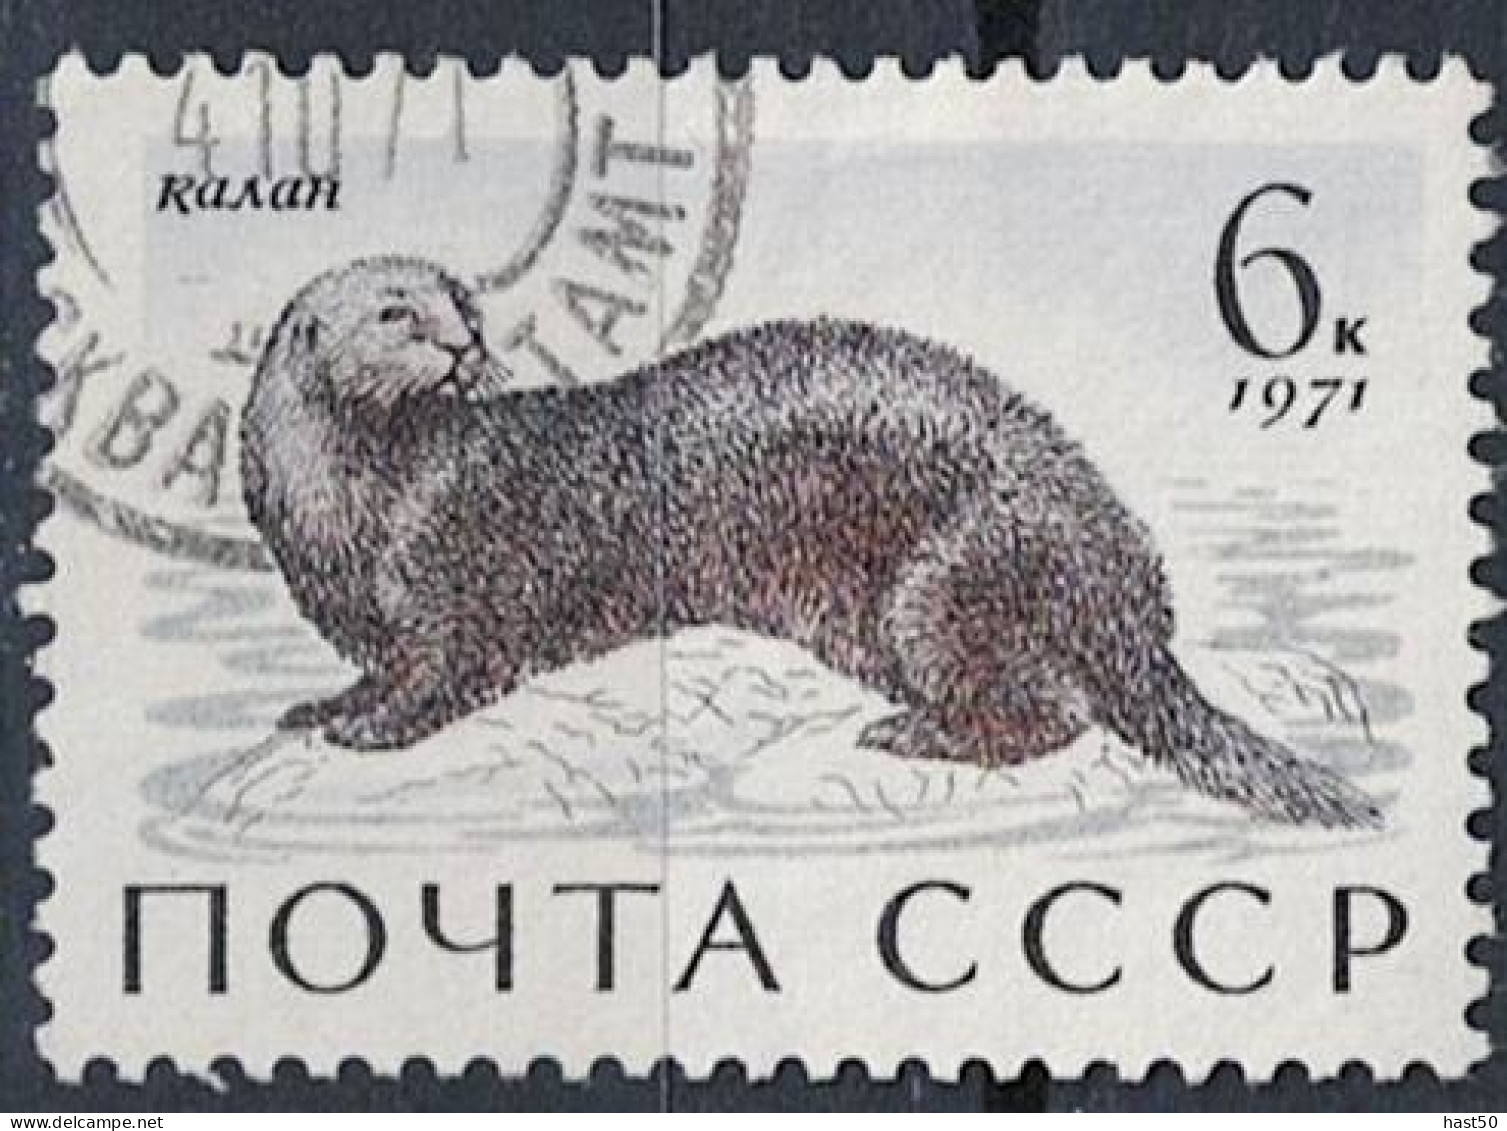 Sowjetunion UdSSR - Seeotter (Enhydra Lutris) (MiNr. 3914) 1971 - Gest Used Obl - Gebraucht